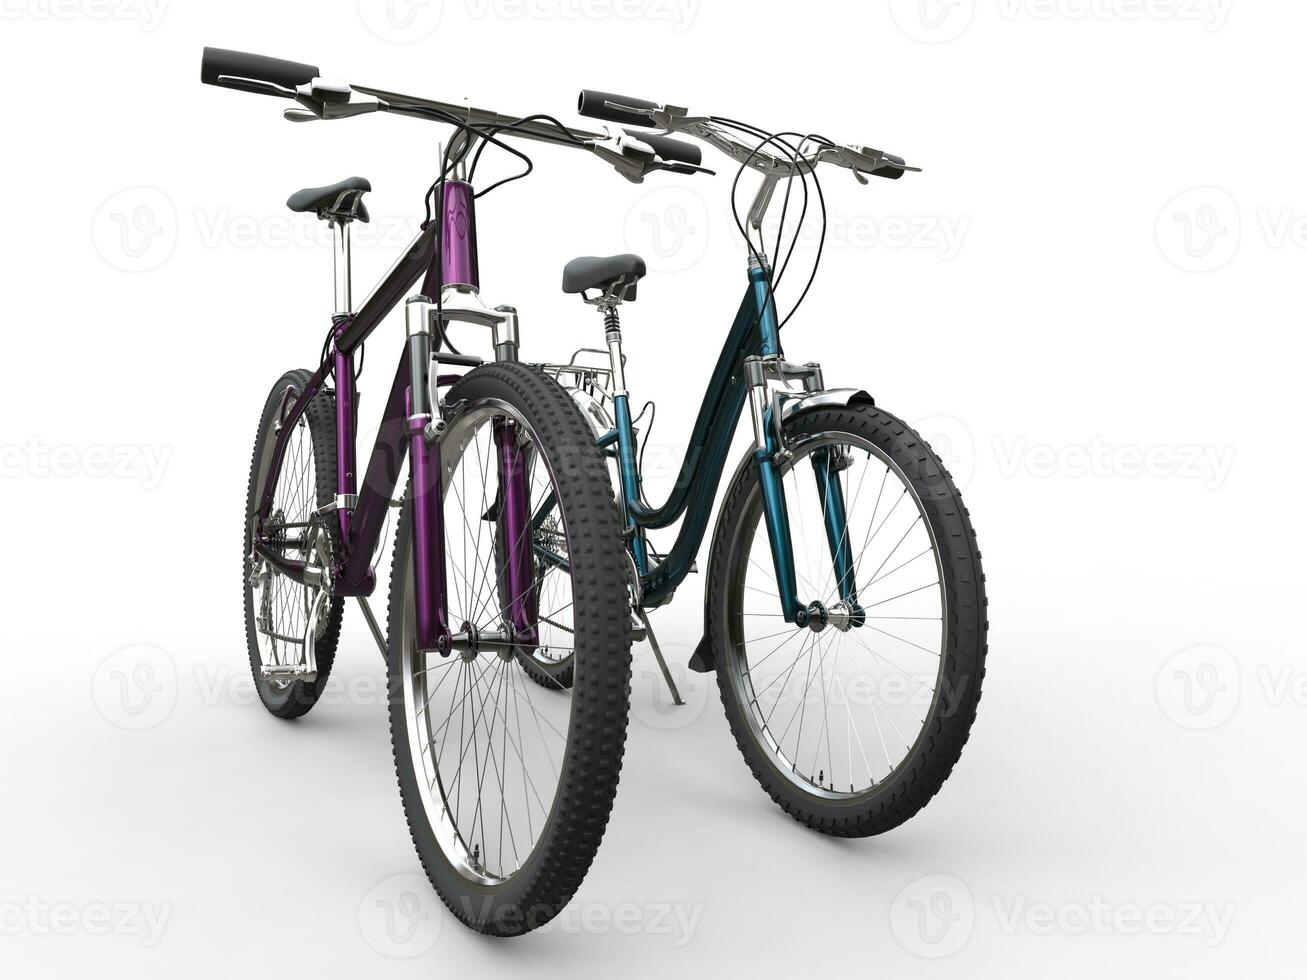 dos moderno bicicletas - metálico colores - diferente modelos foto